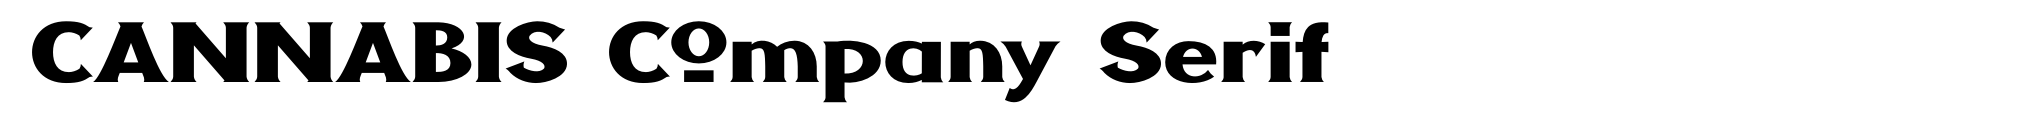 CANNABIS Company Serif image